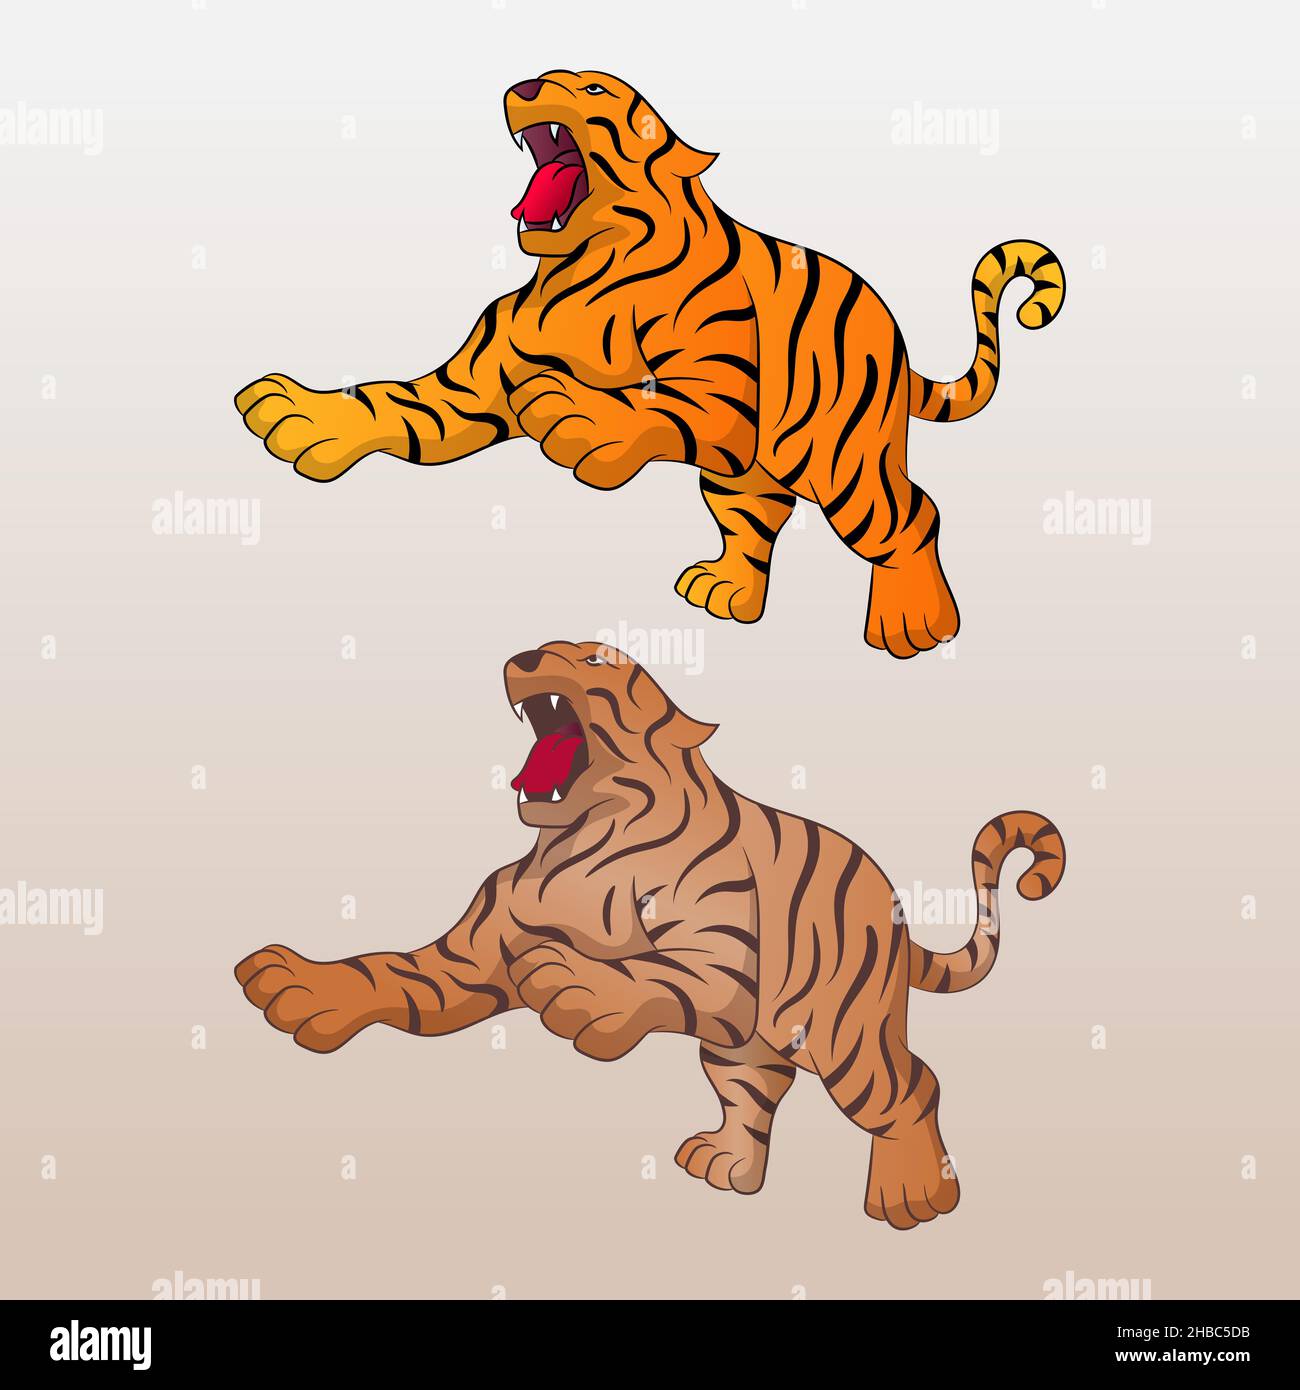 Jumping and roaring Tiger vector illustration Stock Vector